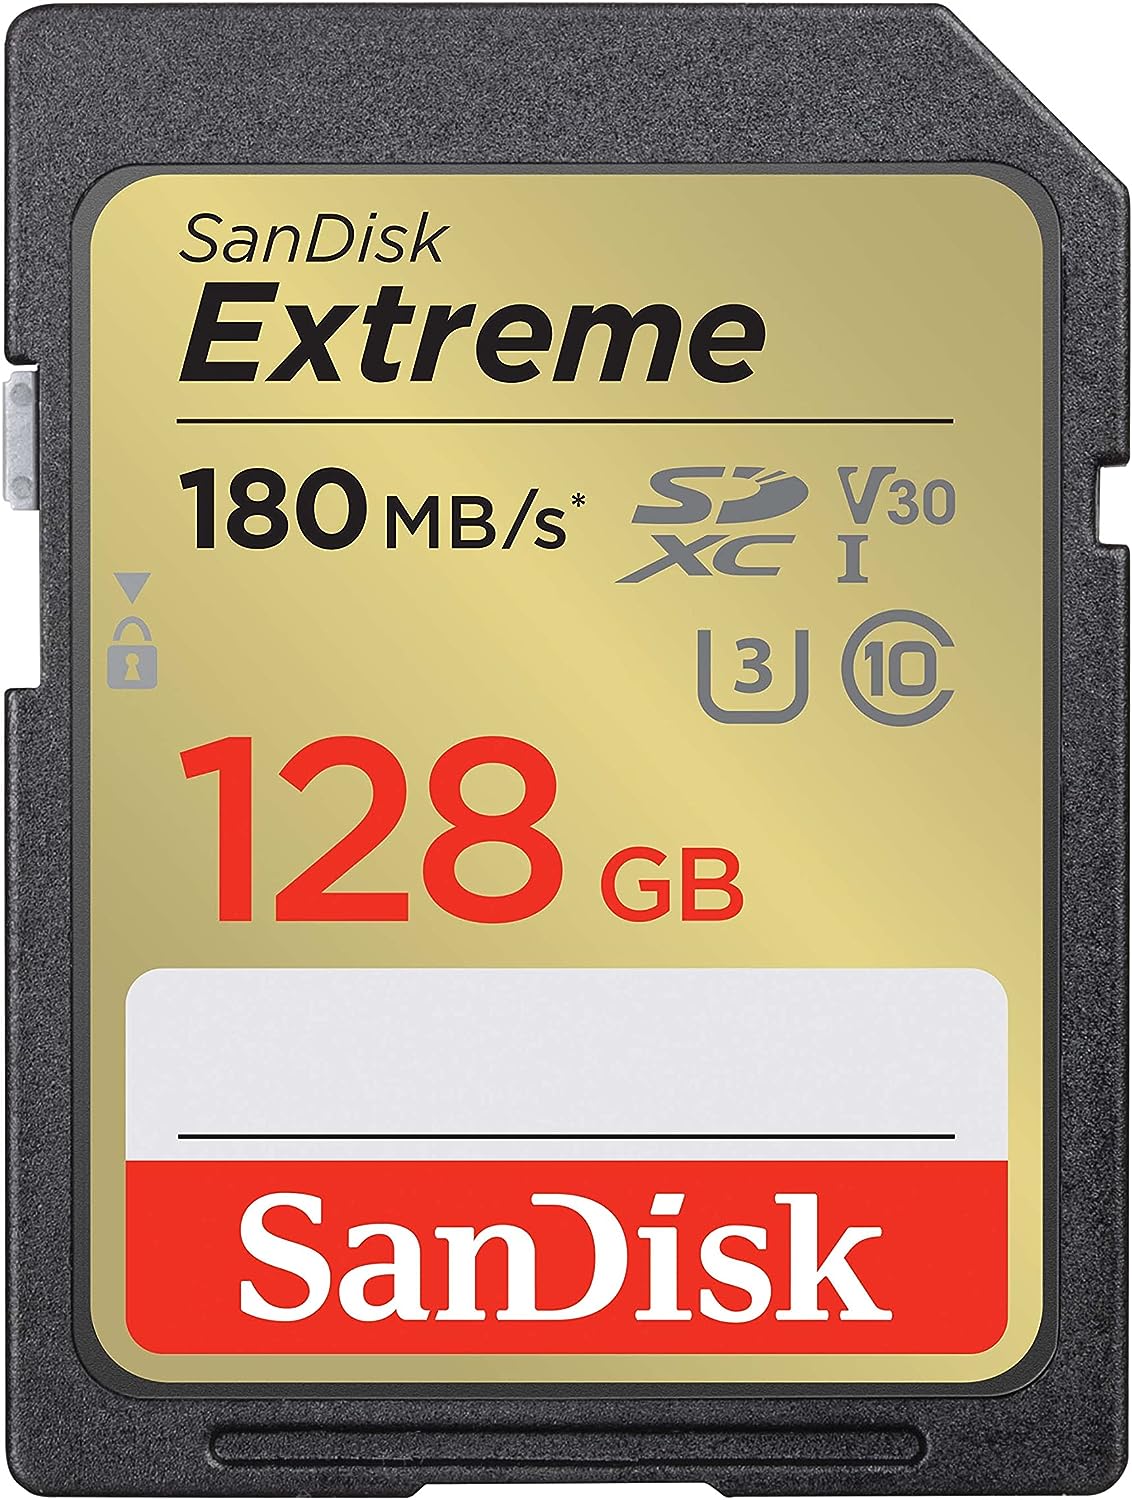 636e49b782ec243c3313a5d2 sandisk 128gb extreme sdxc uhs i memory